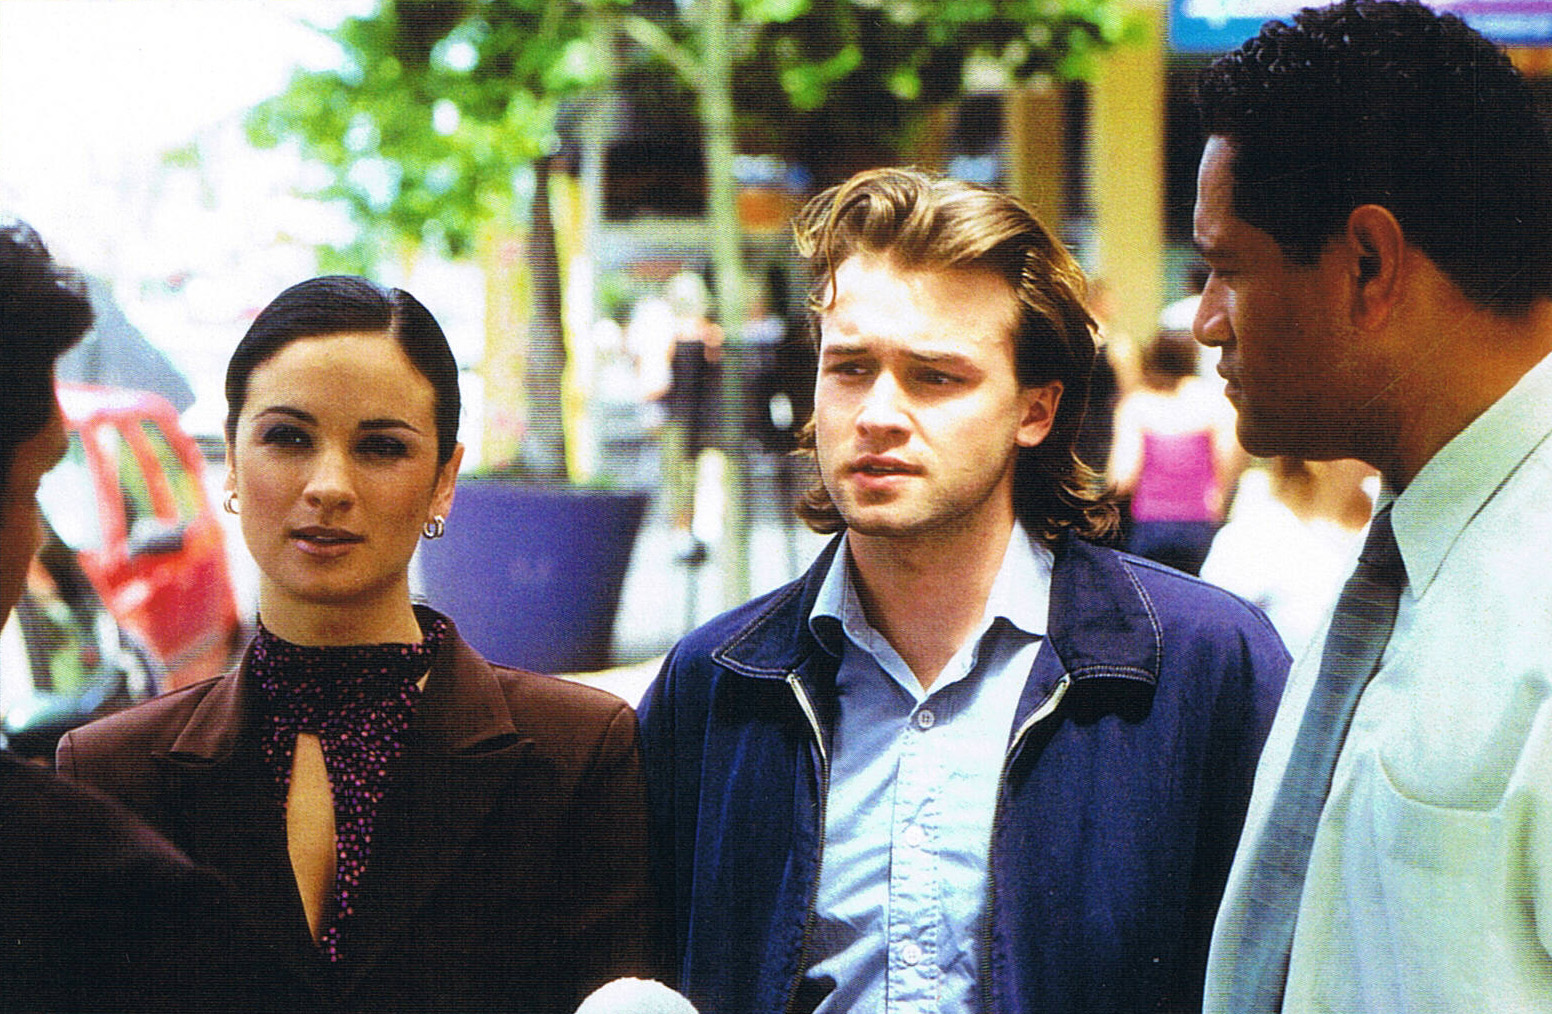 Dwayne Cameron, Katherine Kennard, Jay Laga'aia and Manu Bennet in Street Legal (2002)